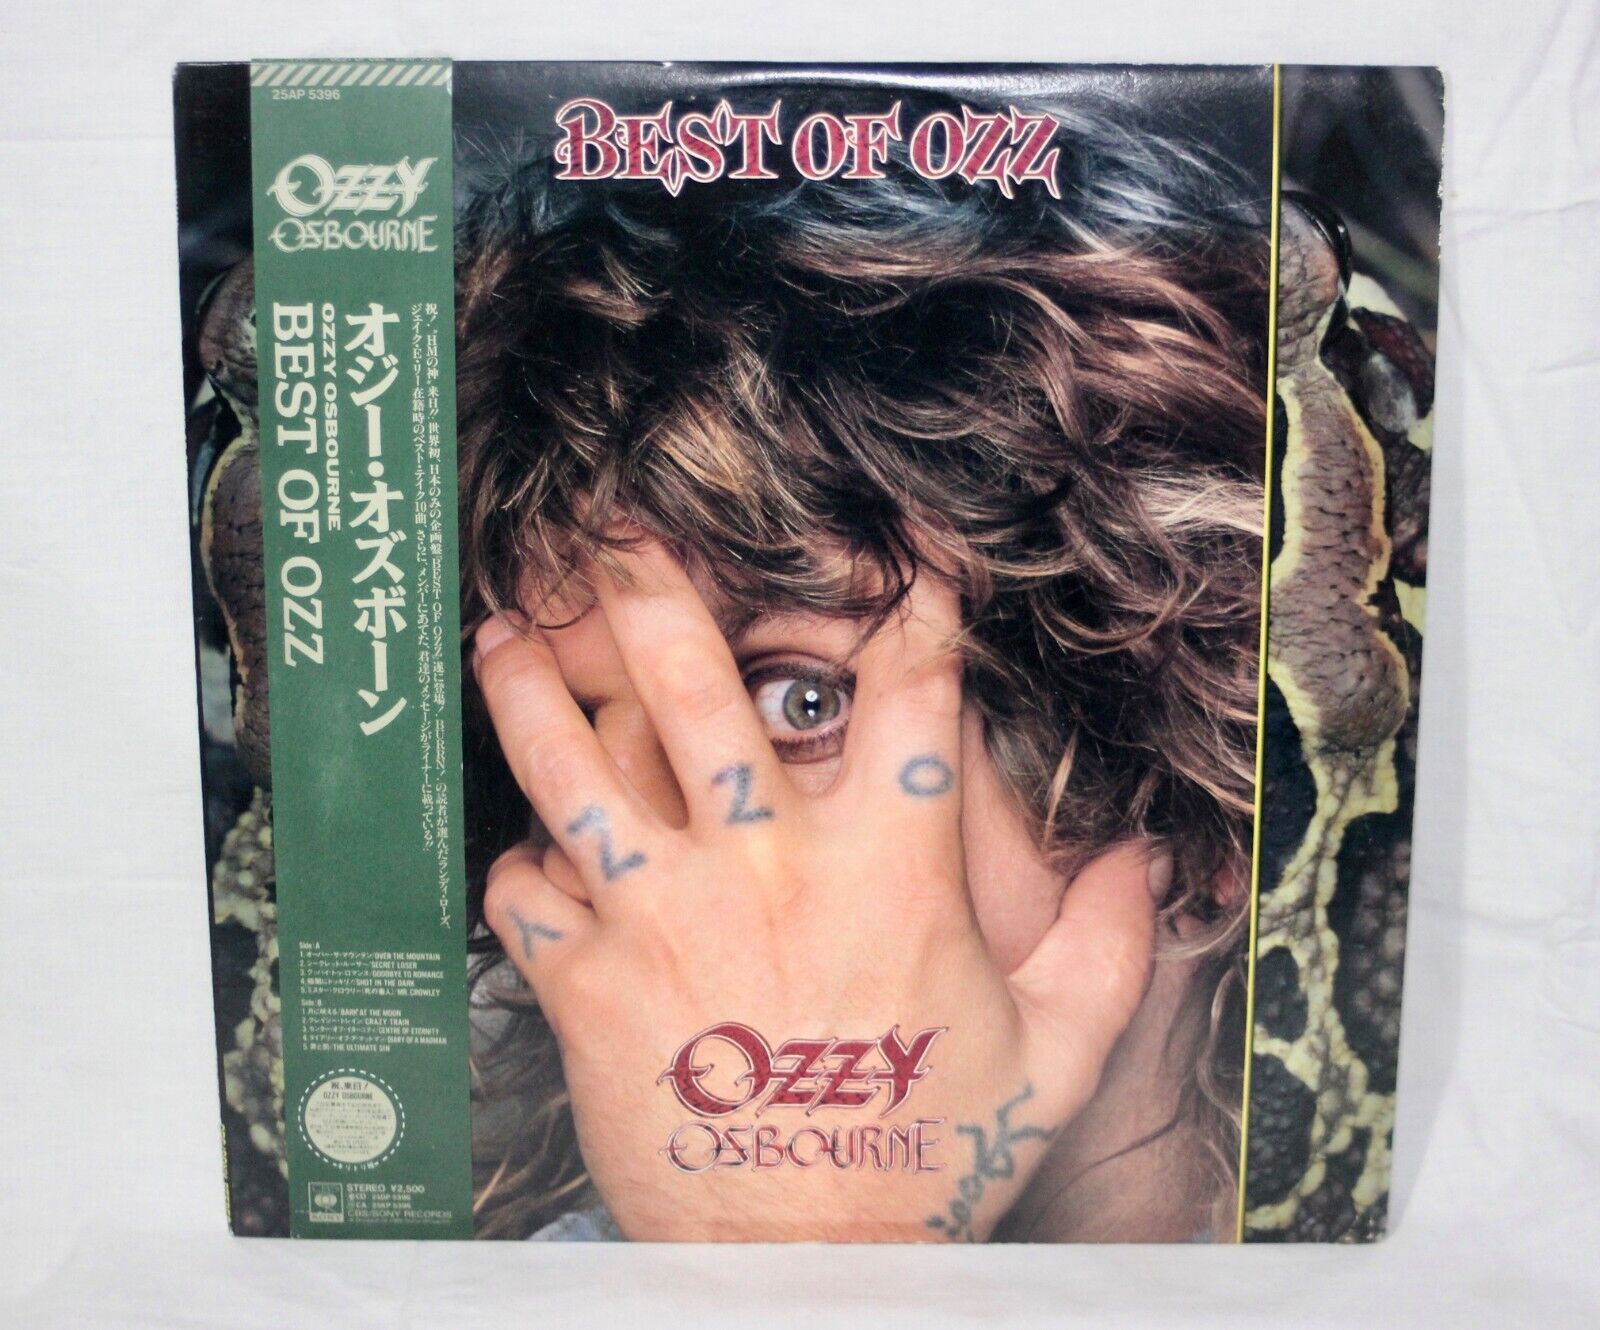 Super Rare OZZY OSBOURNE BEST OF OZZ Vinyl LP 1989 CBS 25AP-5396 w / obi Japan